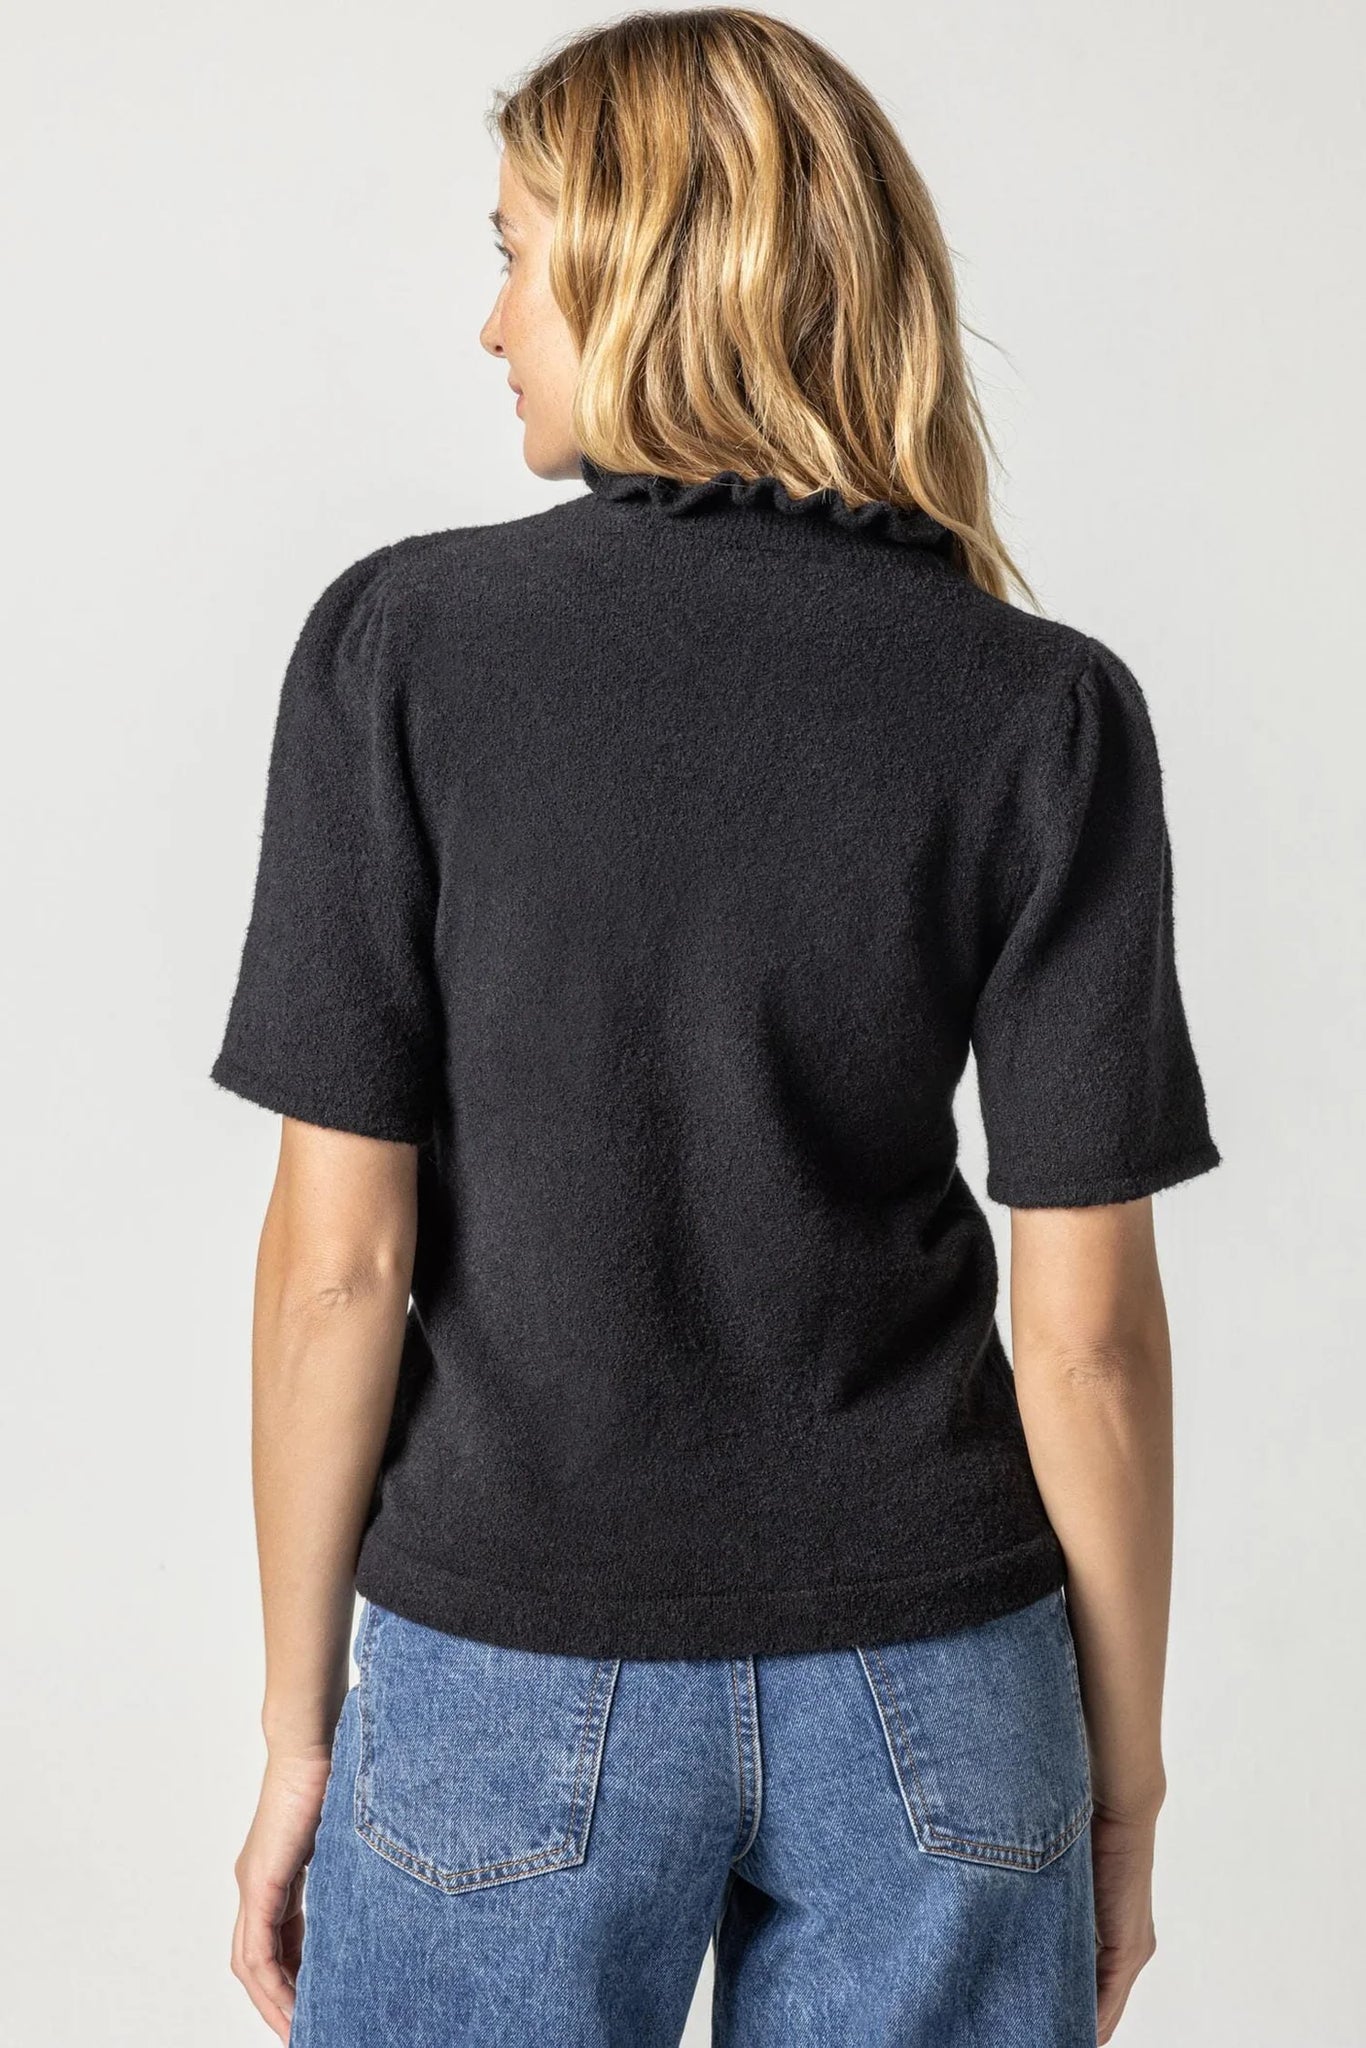 Lilla P Elbow Sleeve Mock Neck Sweater - Black